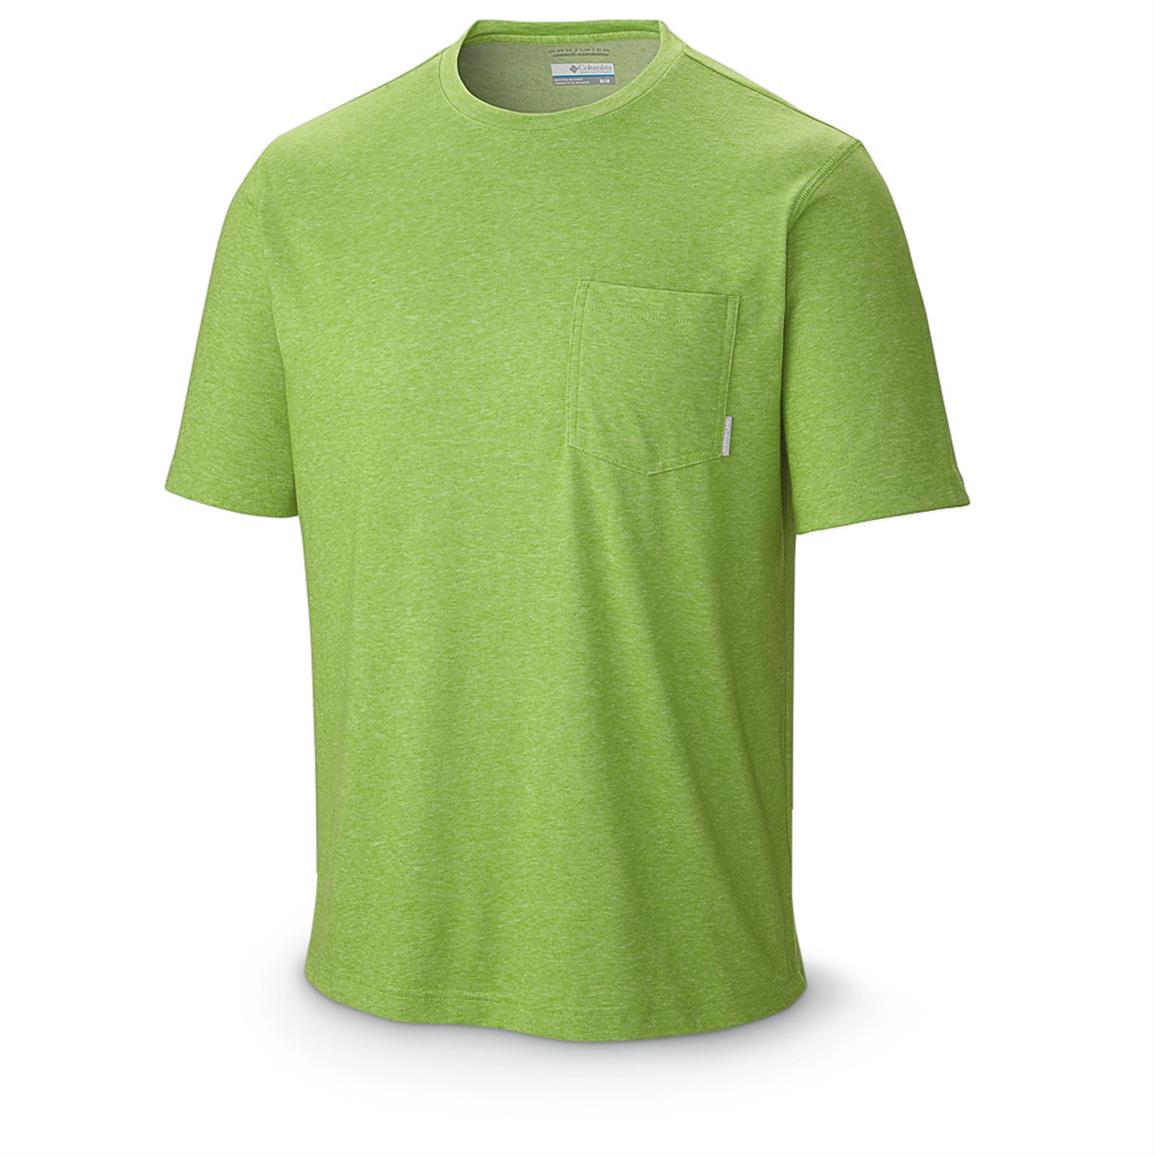 Download Columbia Men's Thistletown Park Pocket T-shirt - 619111, T ...